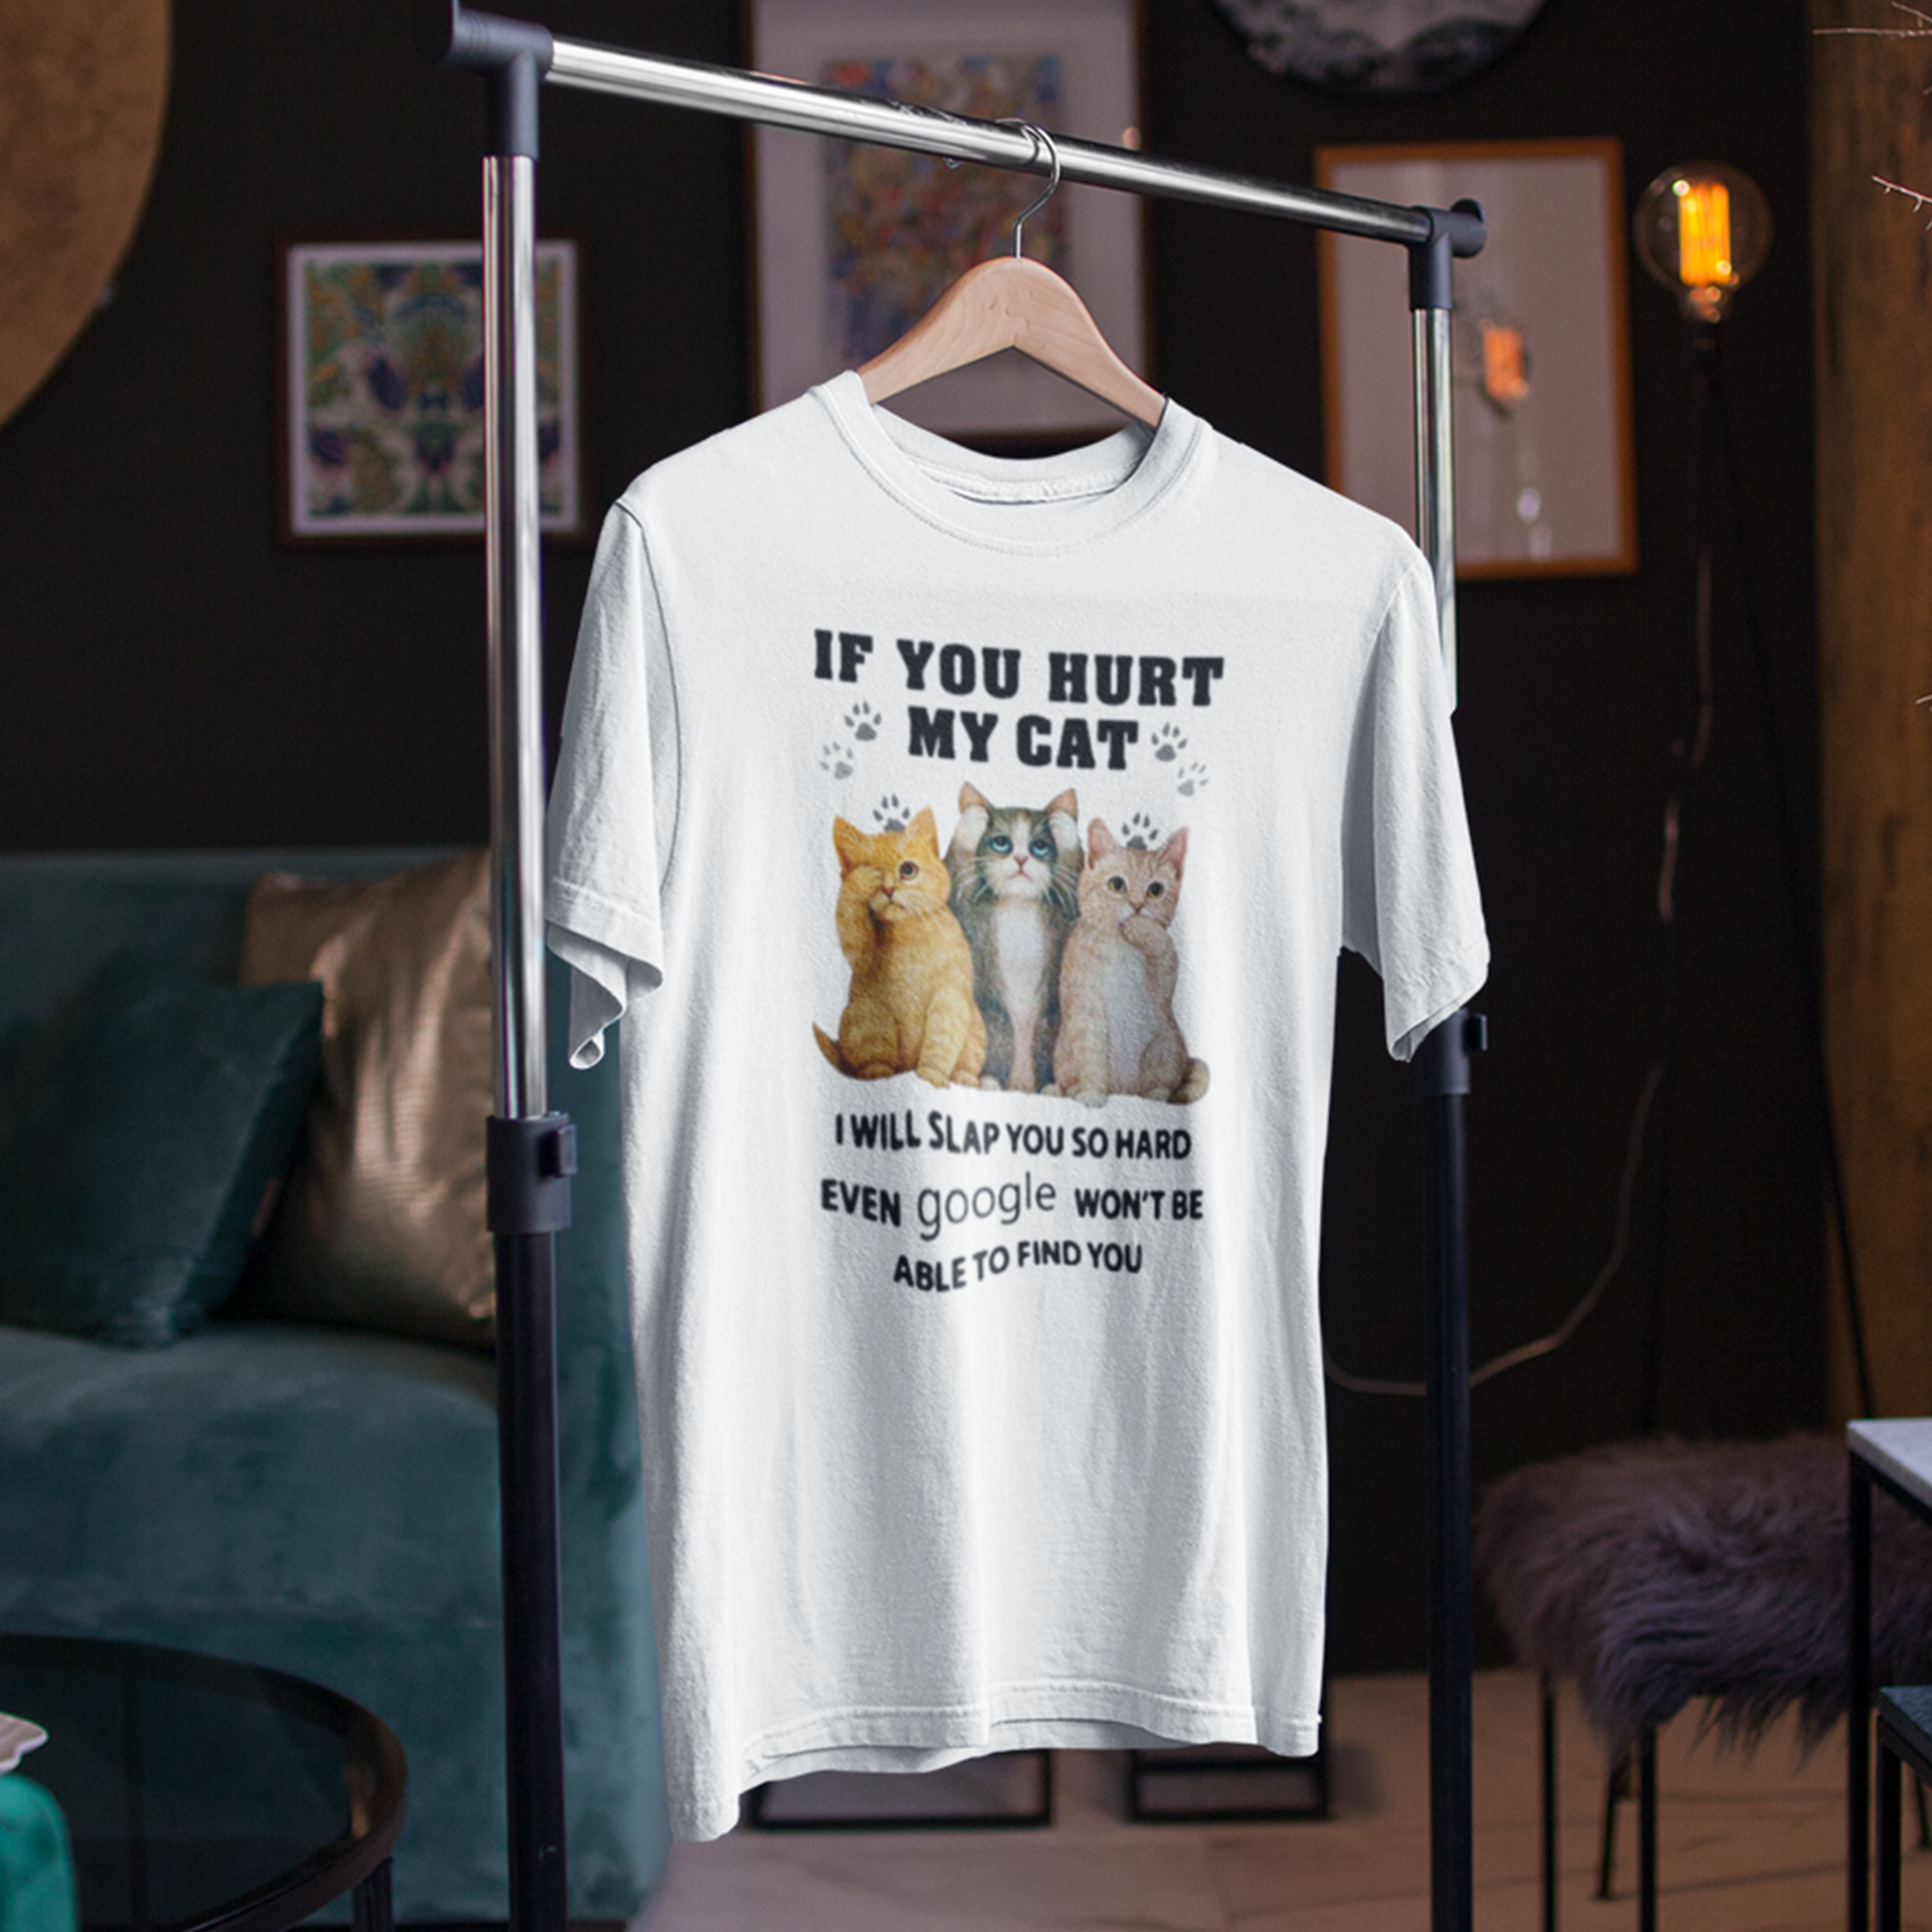 If You Hurt My Cat Shirt, Funny Cat Shirt, TShirt for Cat Lovers, Cat T-Shirt